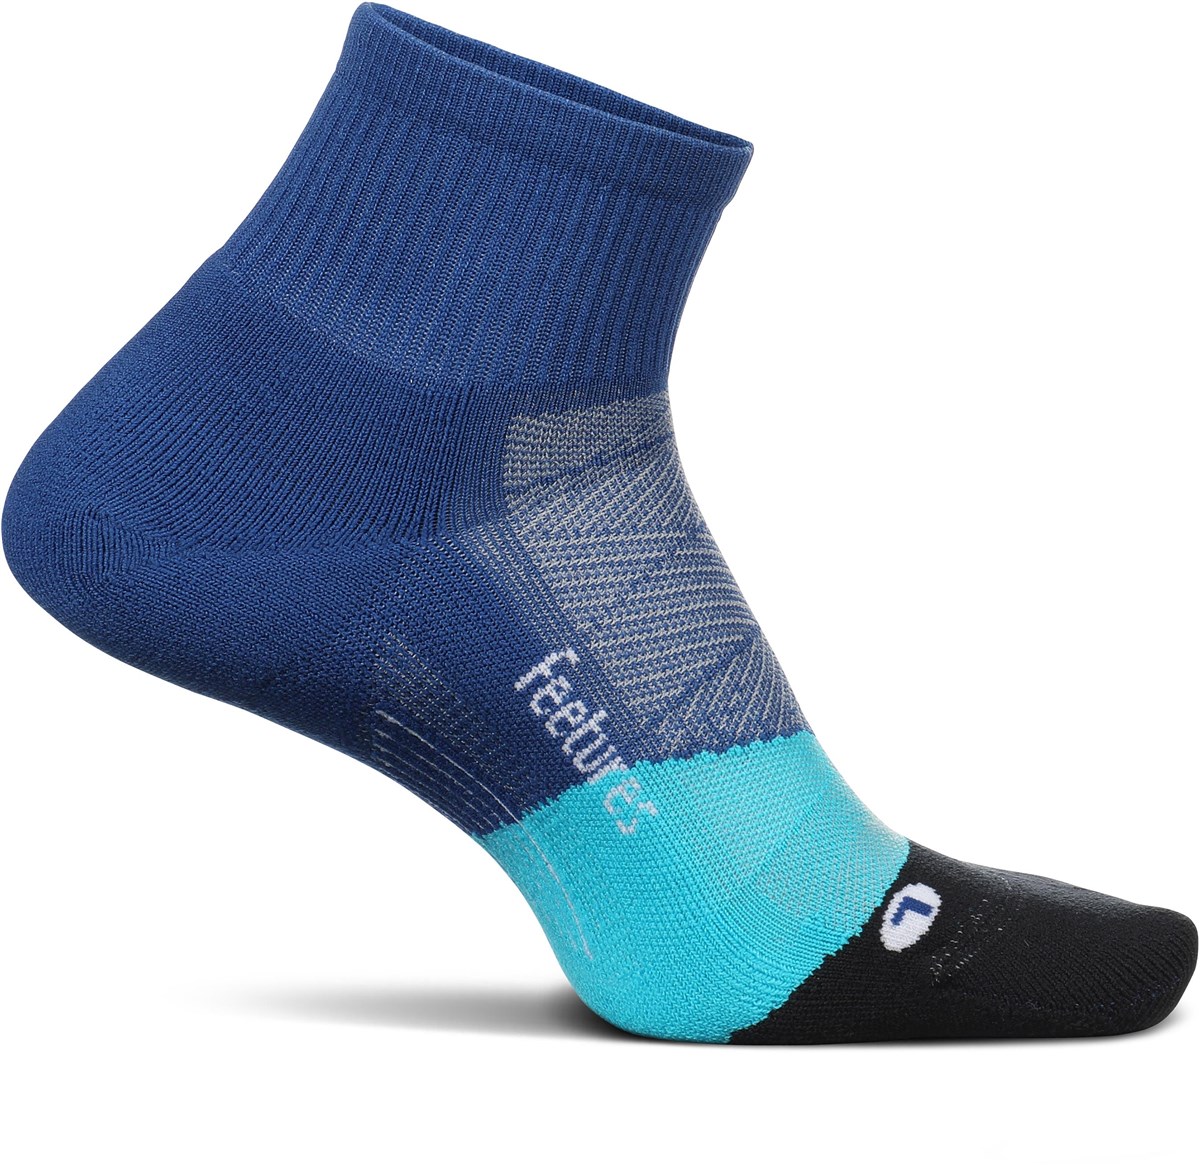 Feetures Elite Light Cushion Quarter Socks (1 Pair) product image